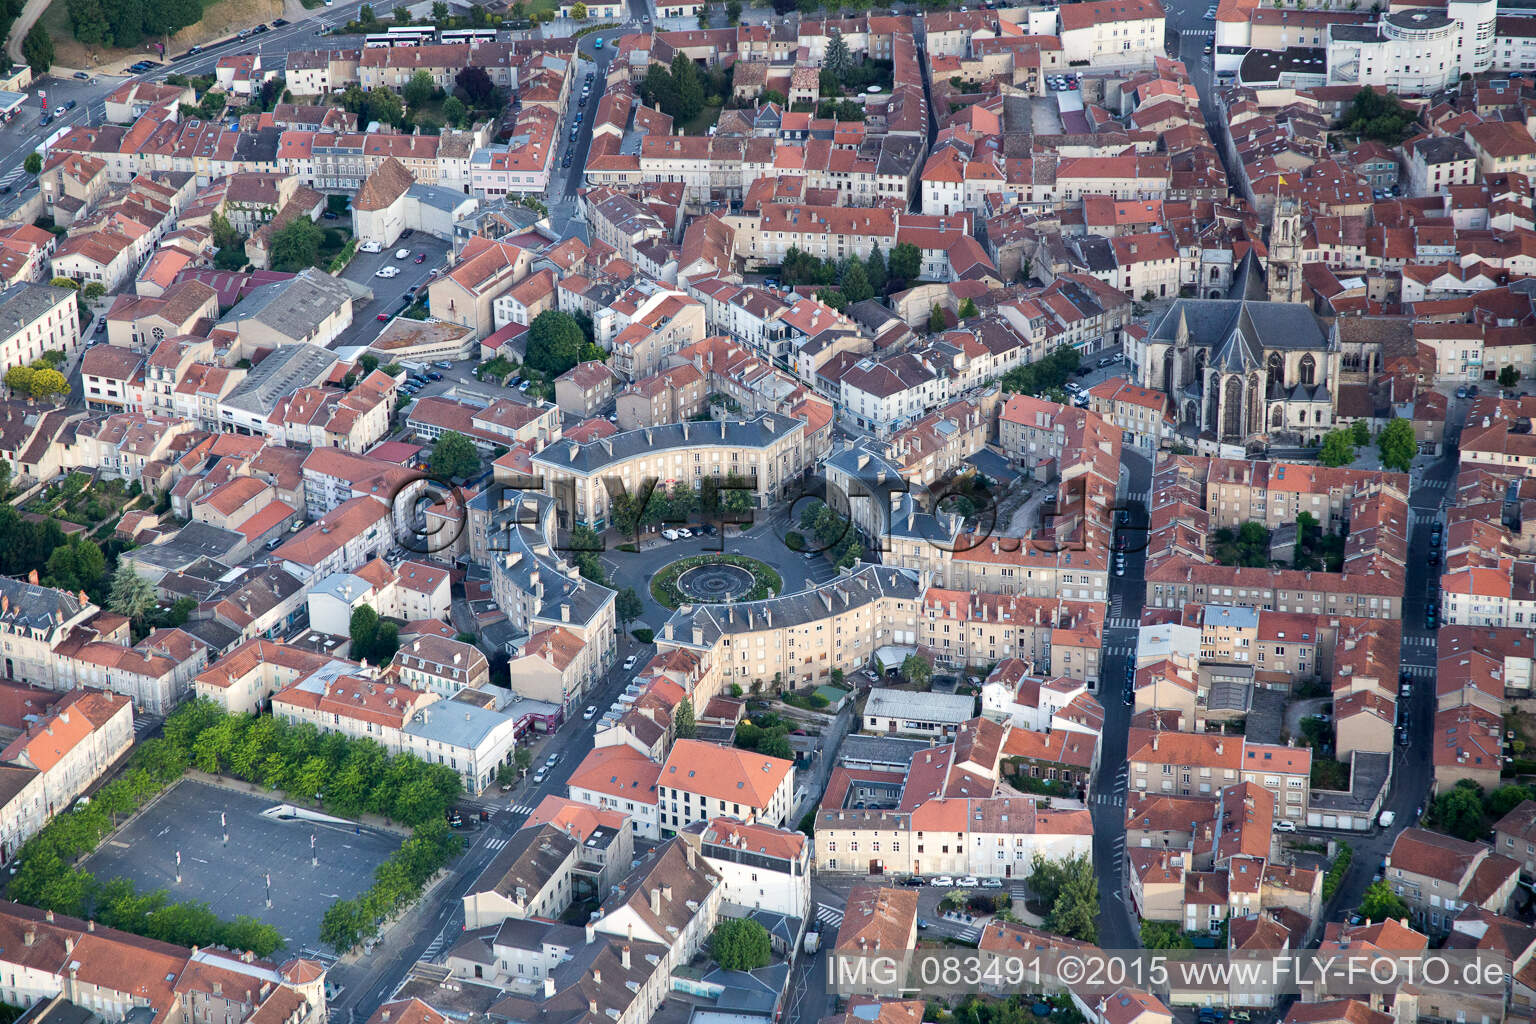 Toul im Bundesland Meurthe-et-Moselle, Frankreich aus der Drohnenperspektive